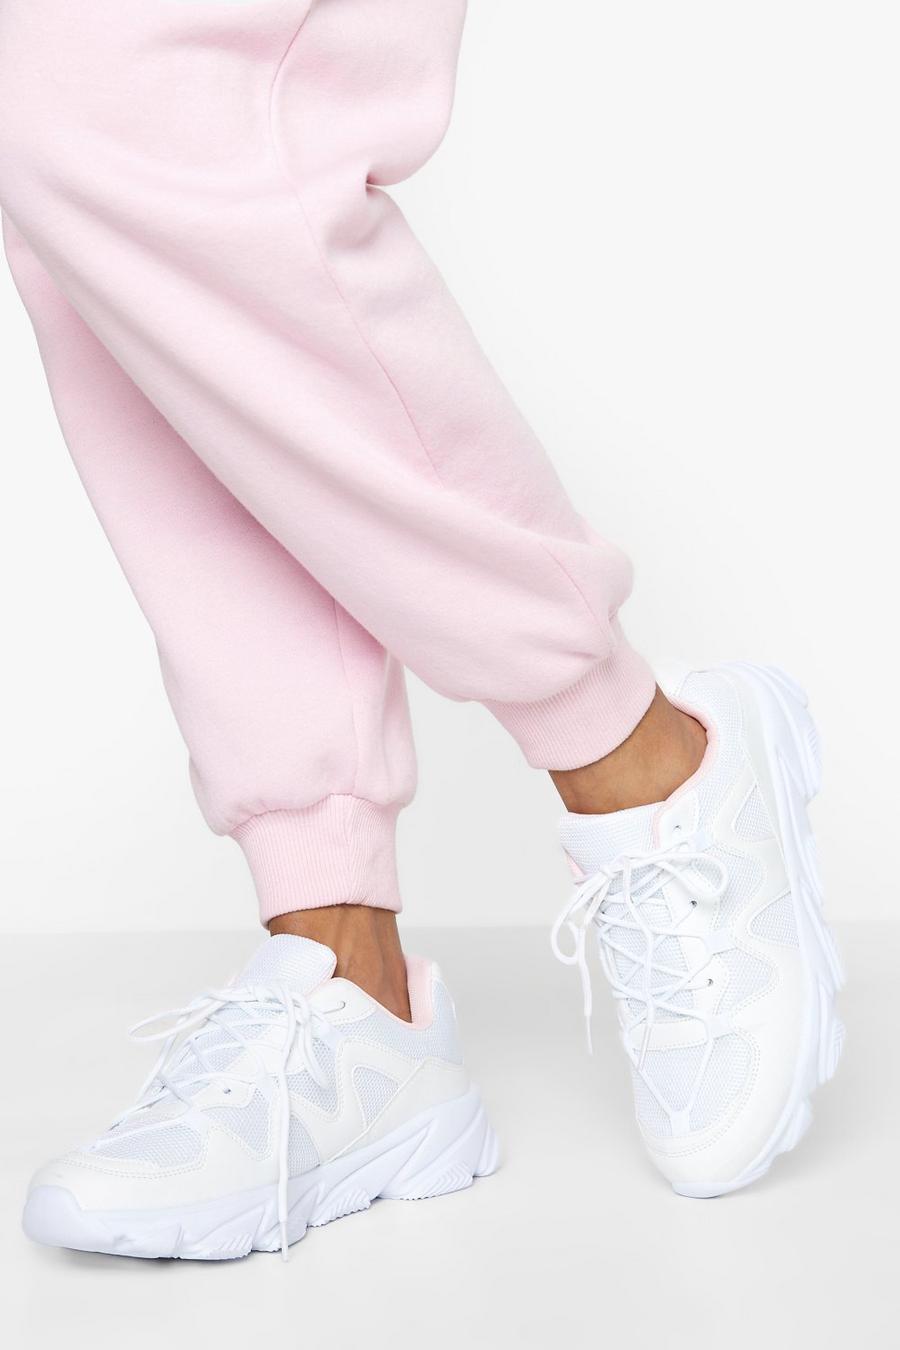 Zapatillas deportivas gruesas de holgura ancha con panel de malla, White bianco